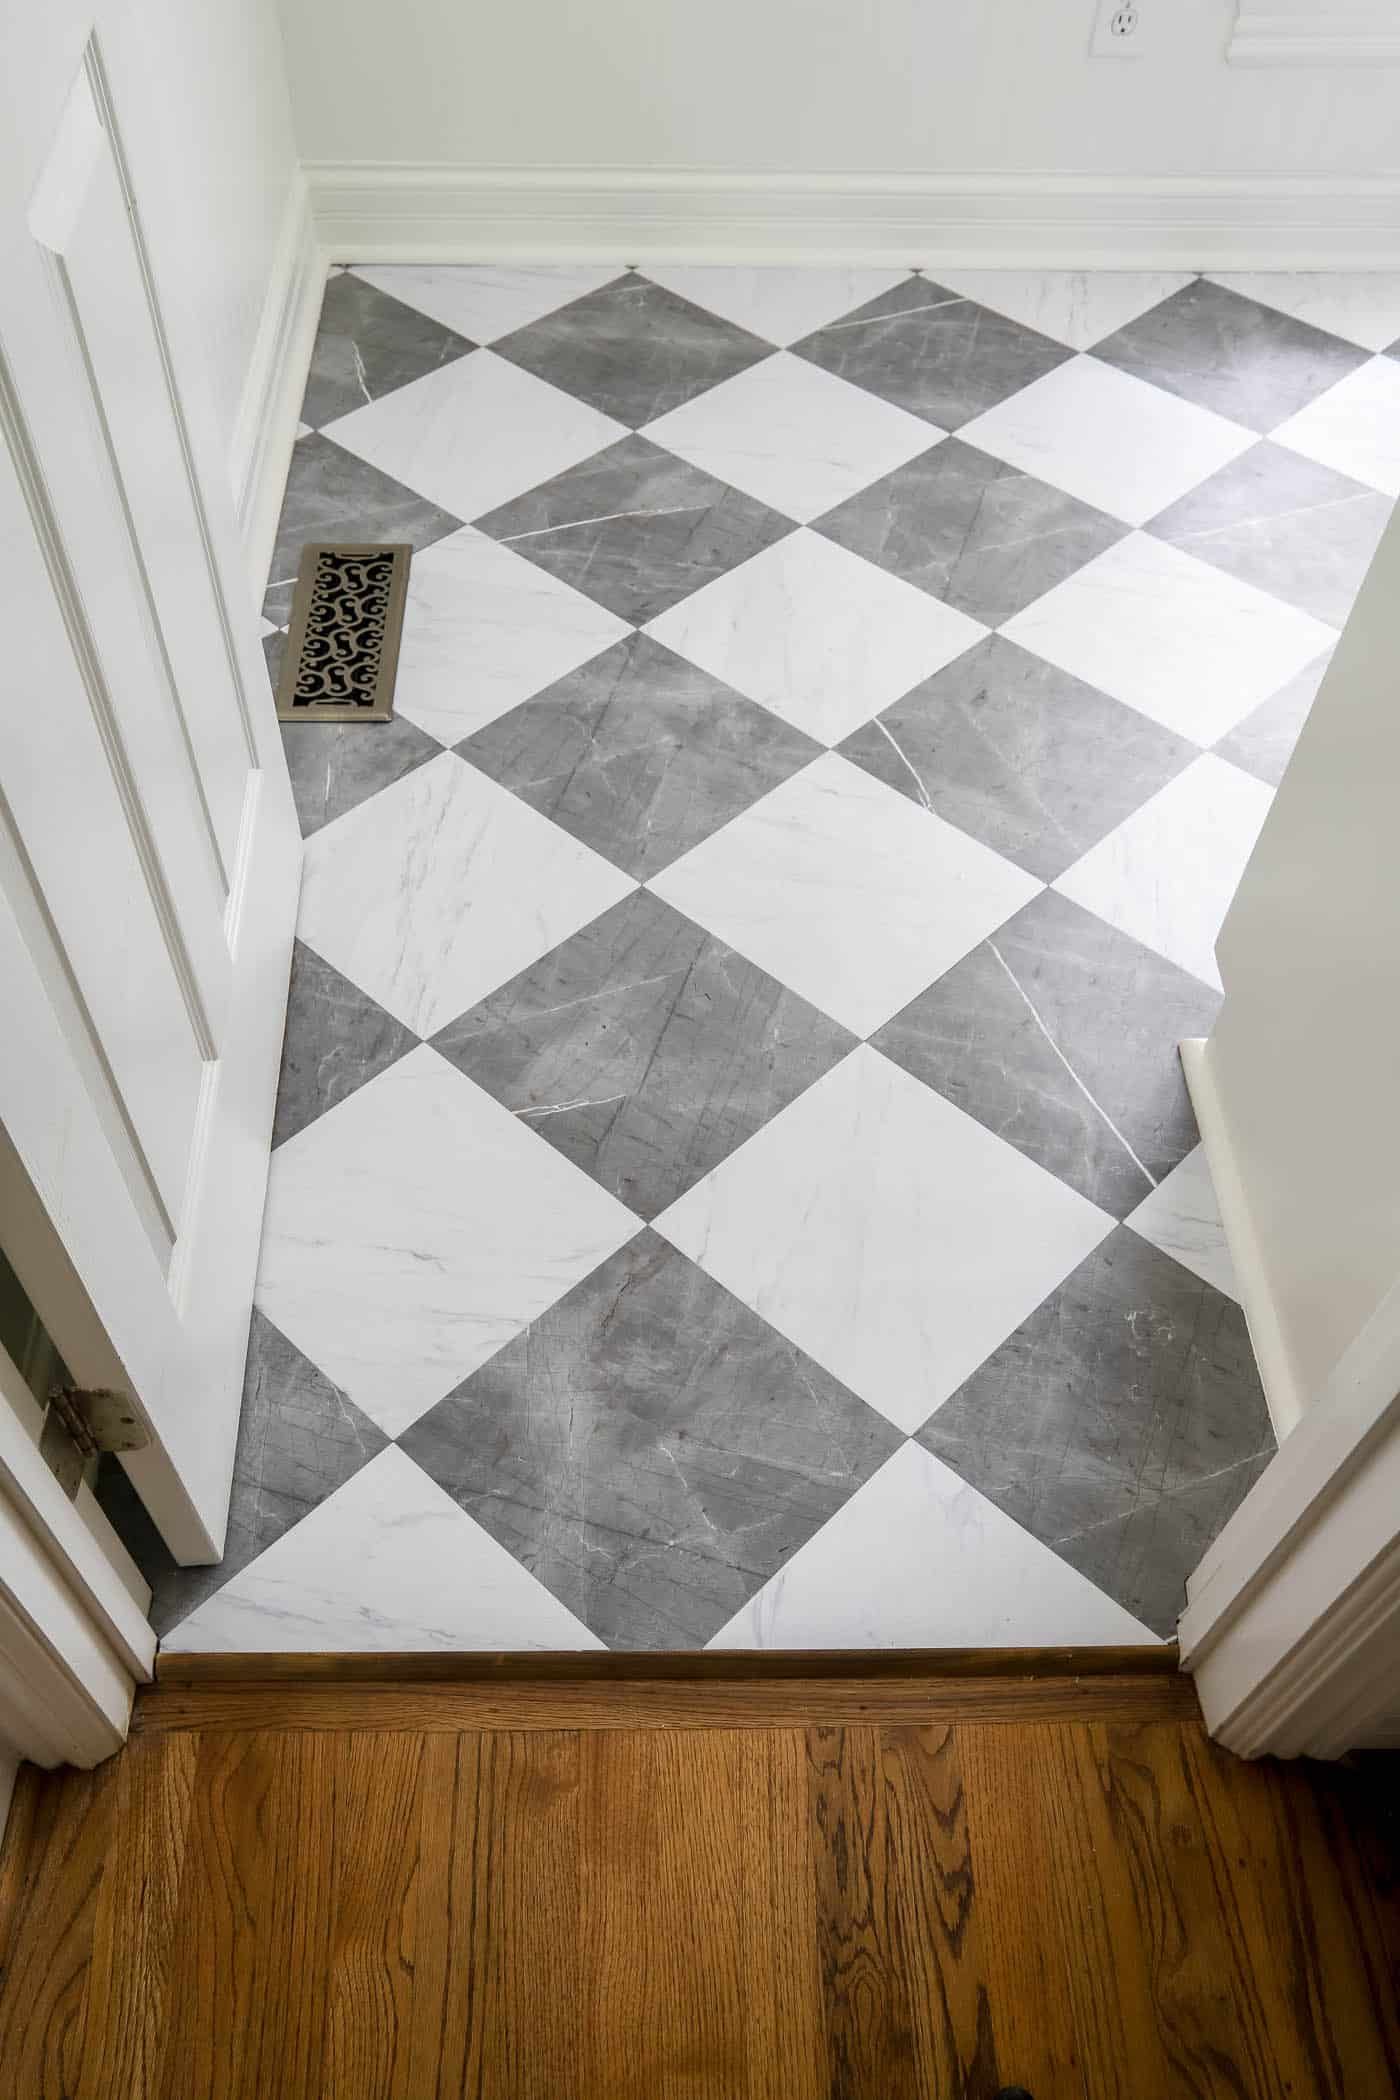 Vinyl flooring tiles is a smart choice